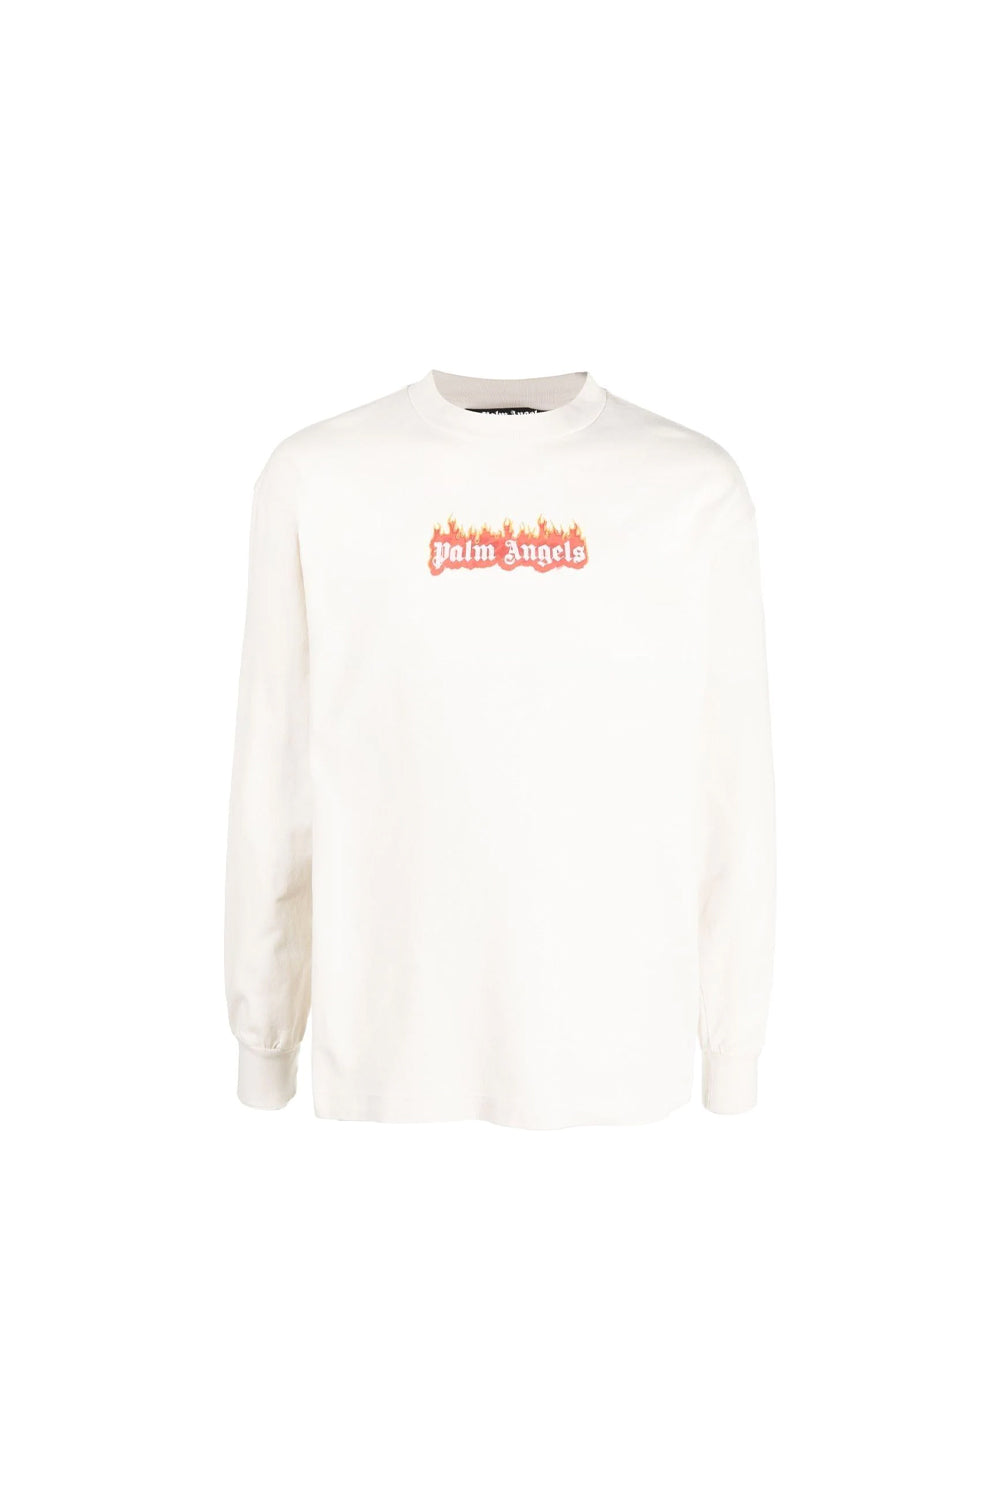 Palm Angels graphic-print cotton sweatshirt